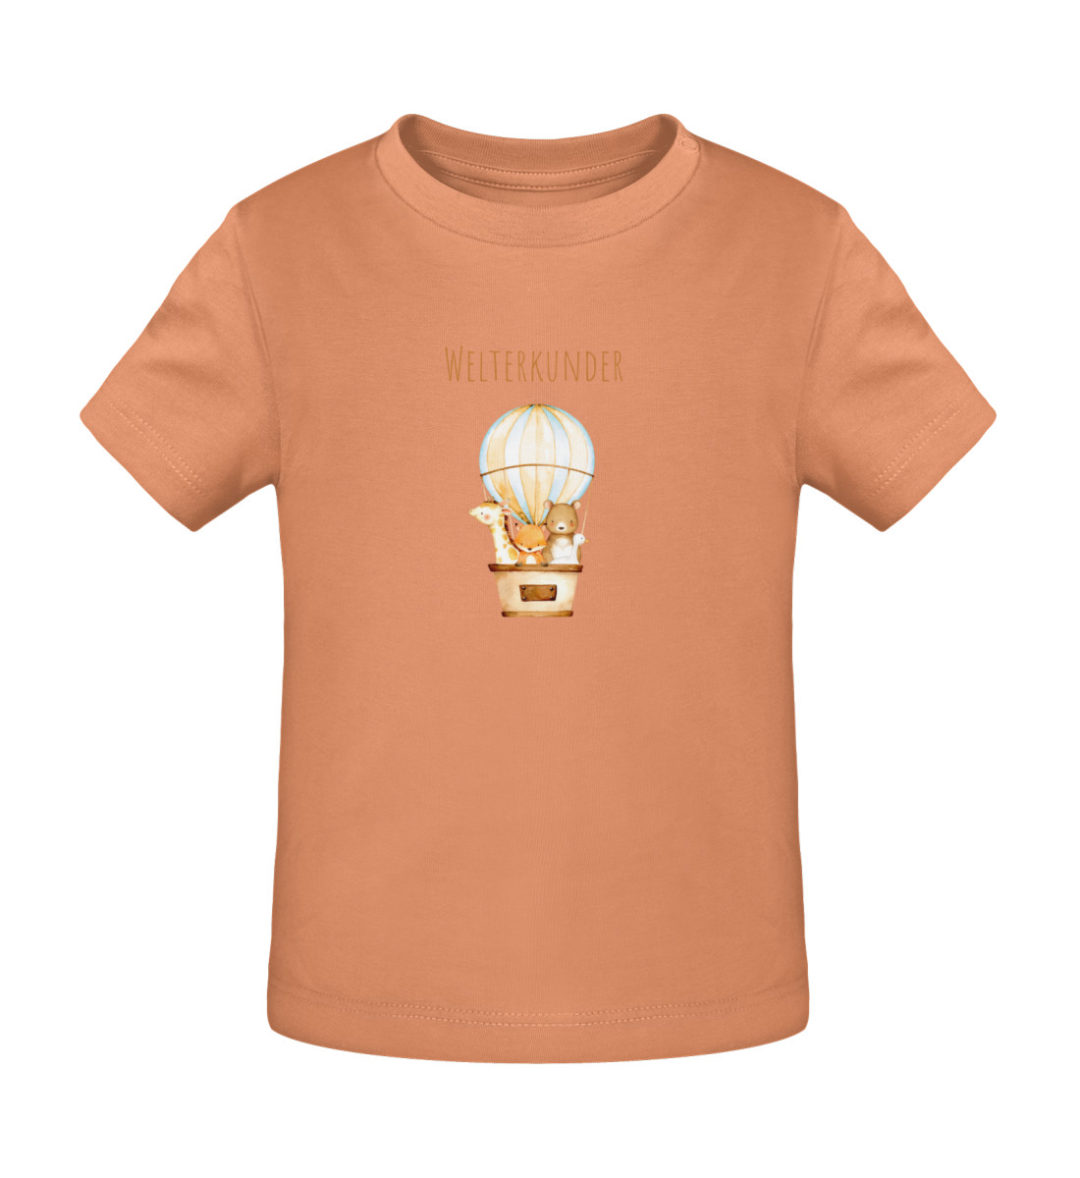 Welterkunder - Baby Creator T-Shirt ST/ST-7101